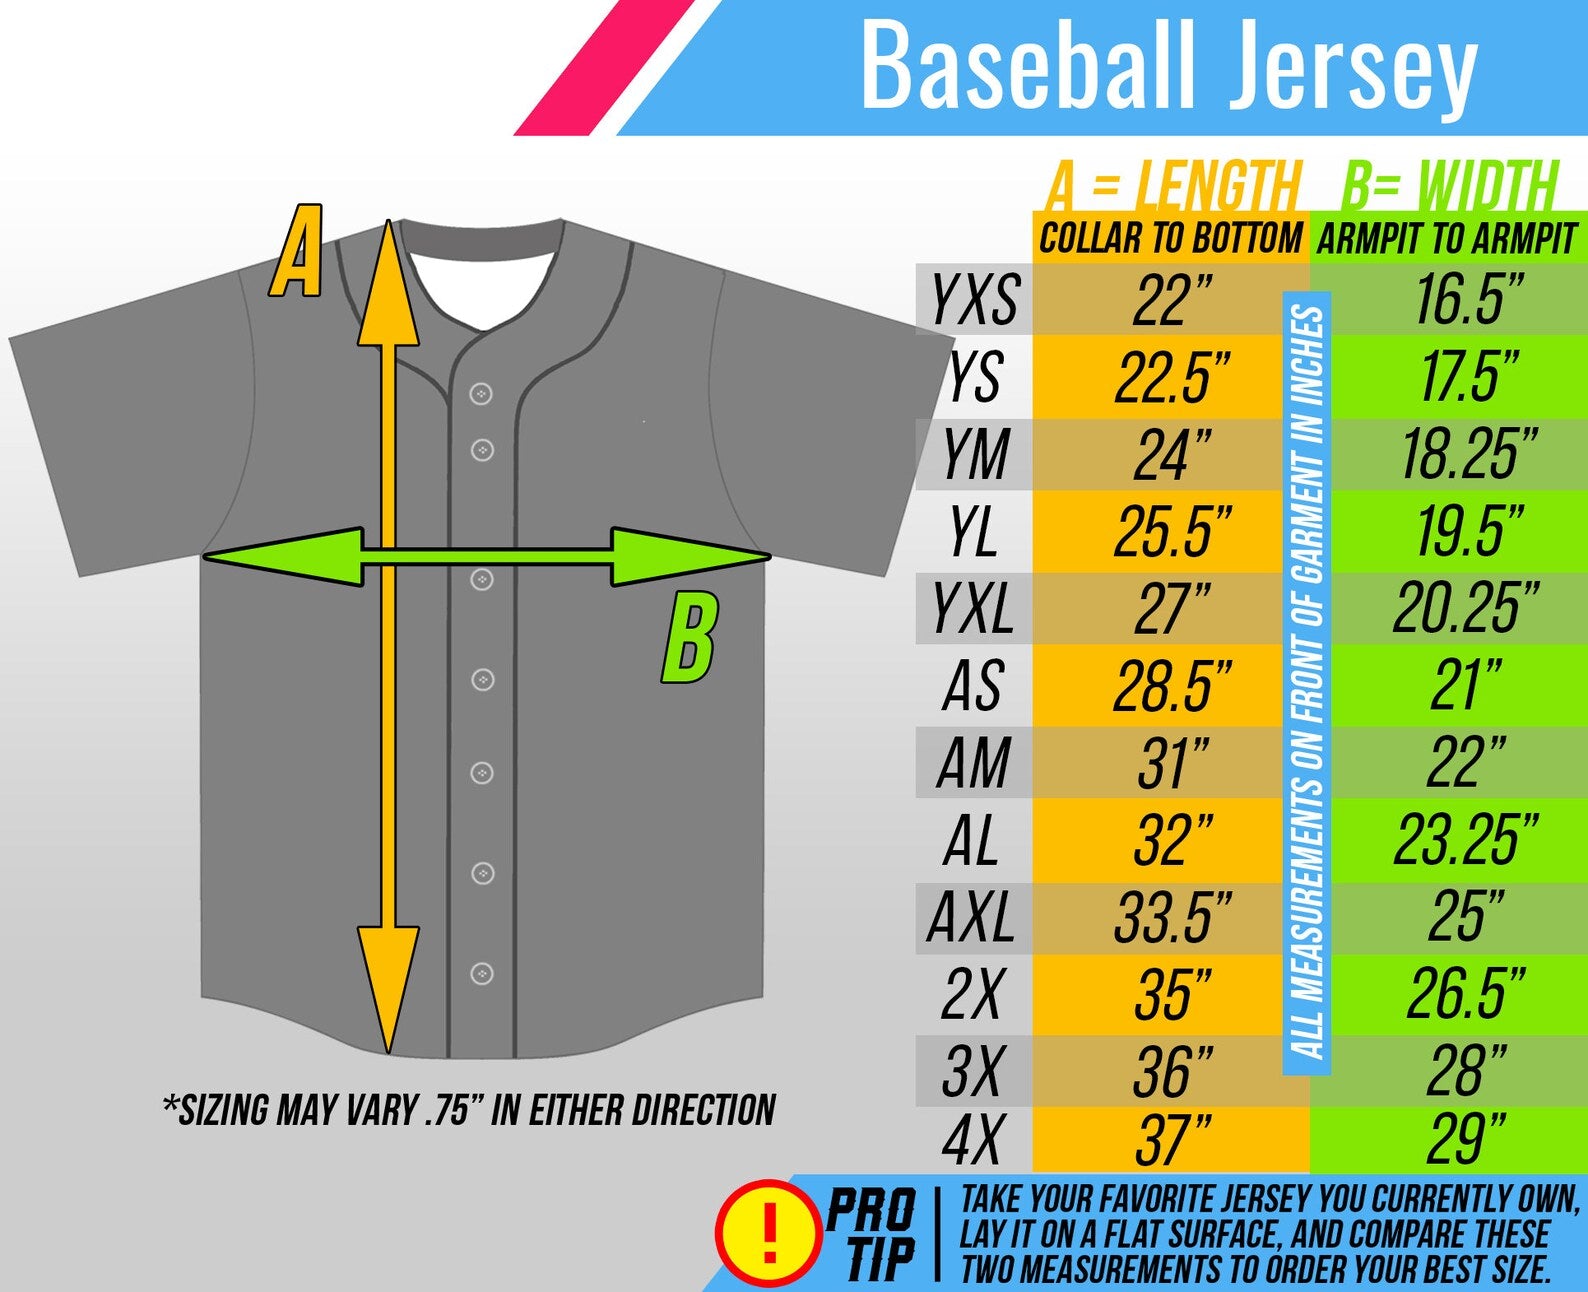 The Sandlot Benny Rodriguez Baseball Jersey Stitched Movie Sports